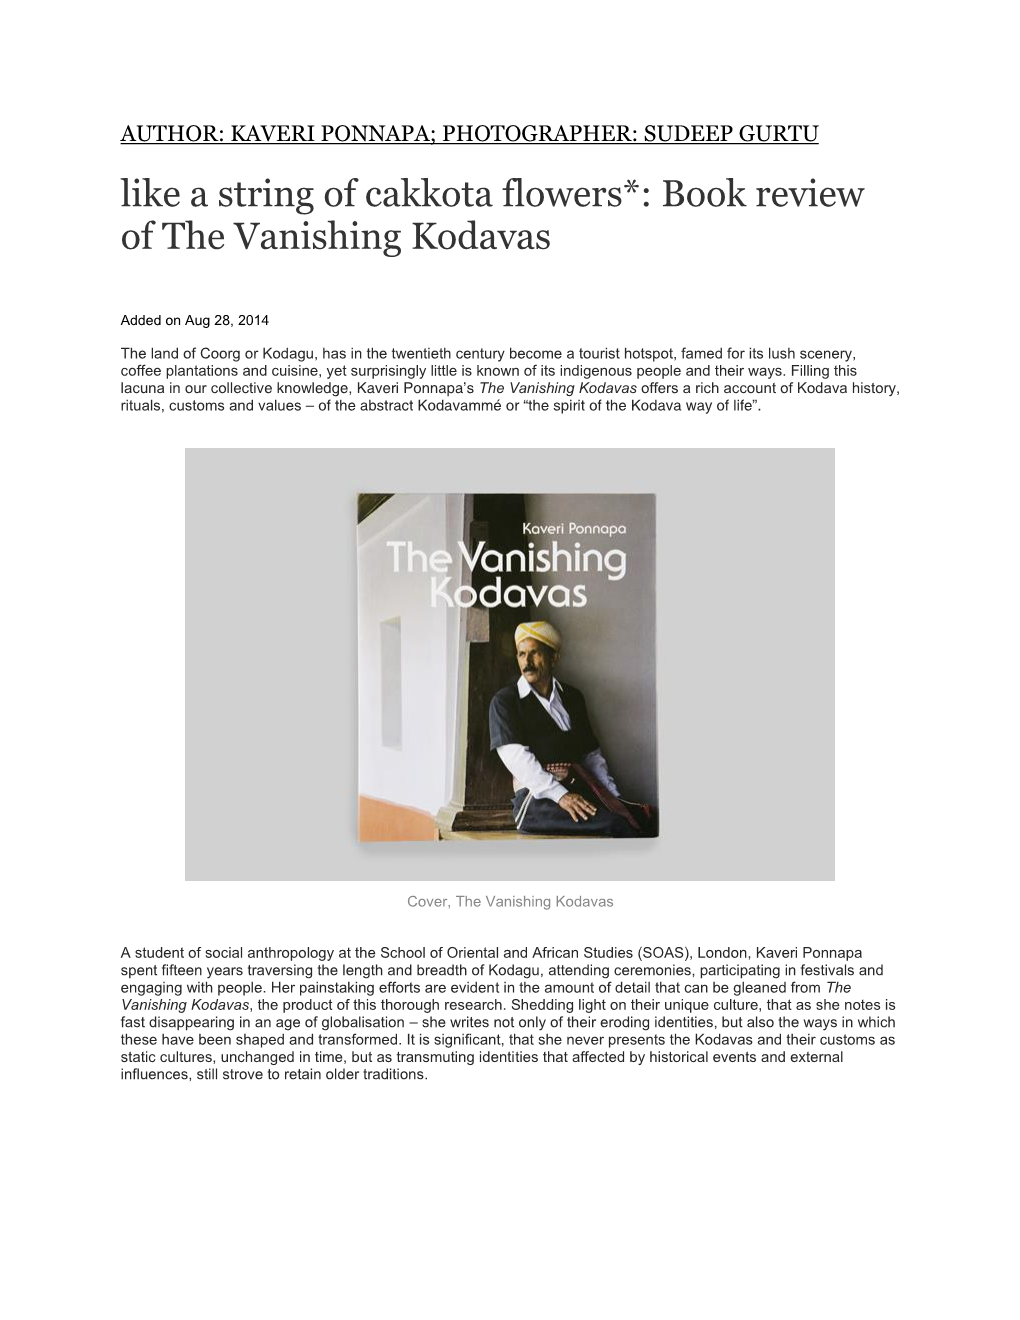 Like a String of Cakkota Flowers*: Book Review of the Vanishing Kodavas